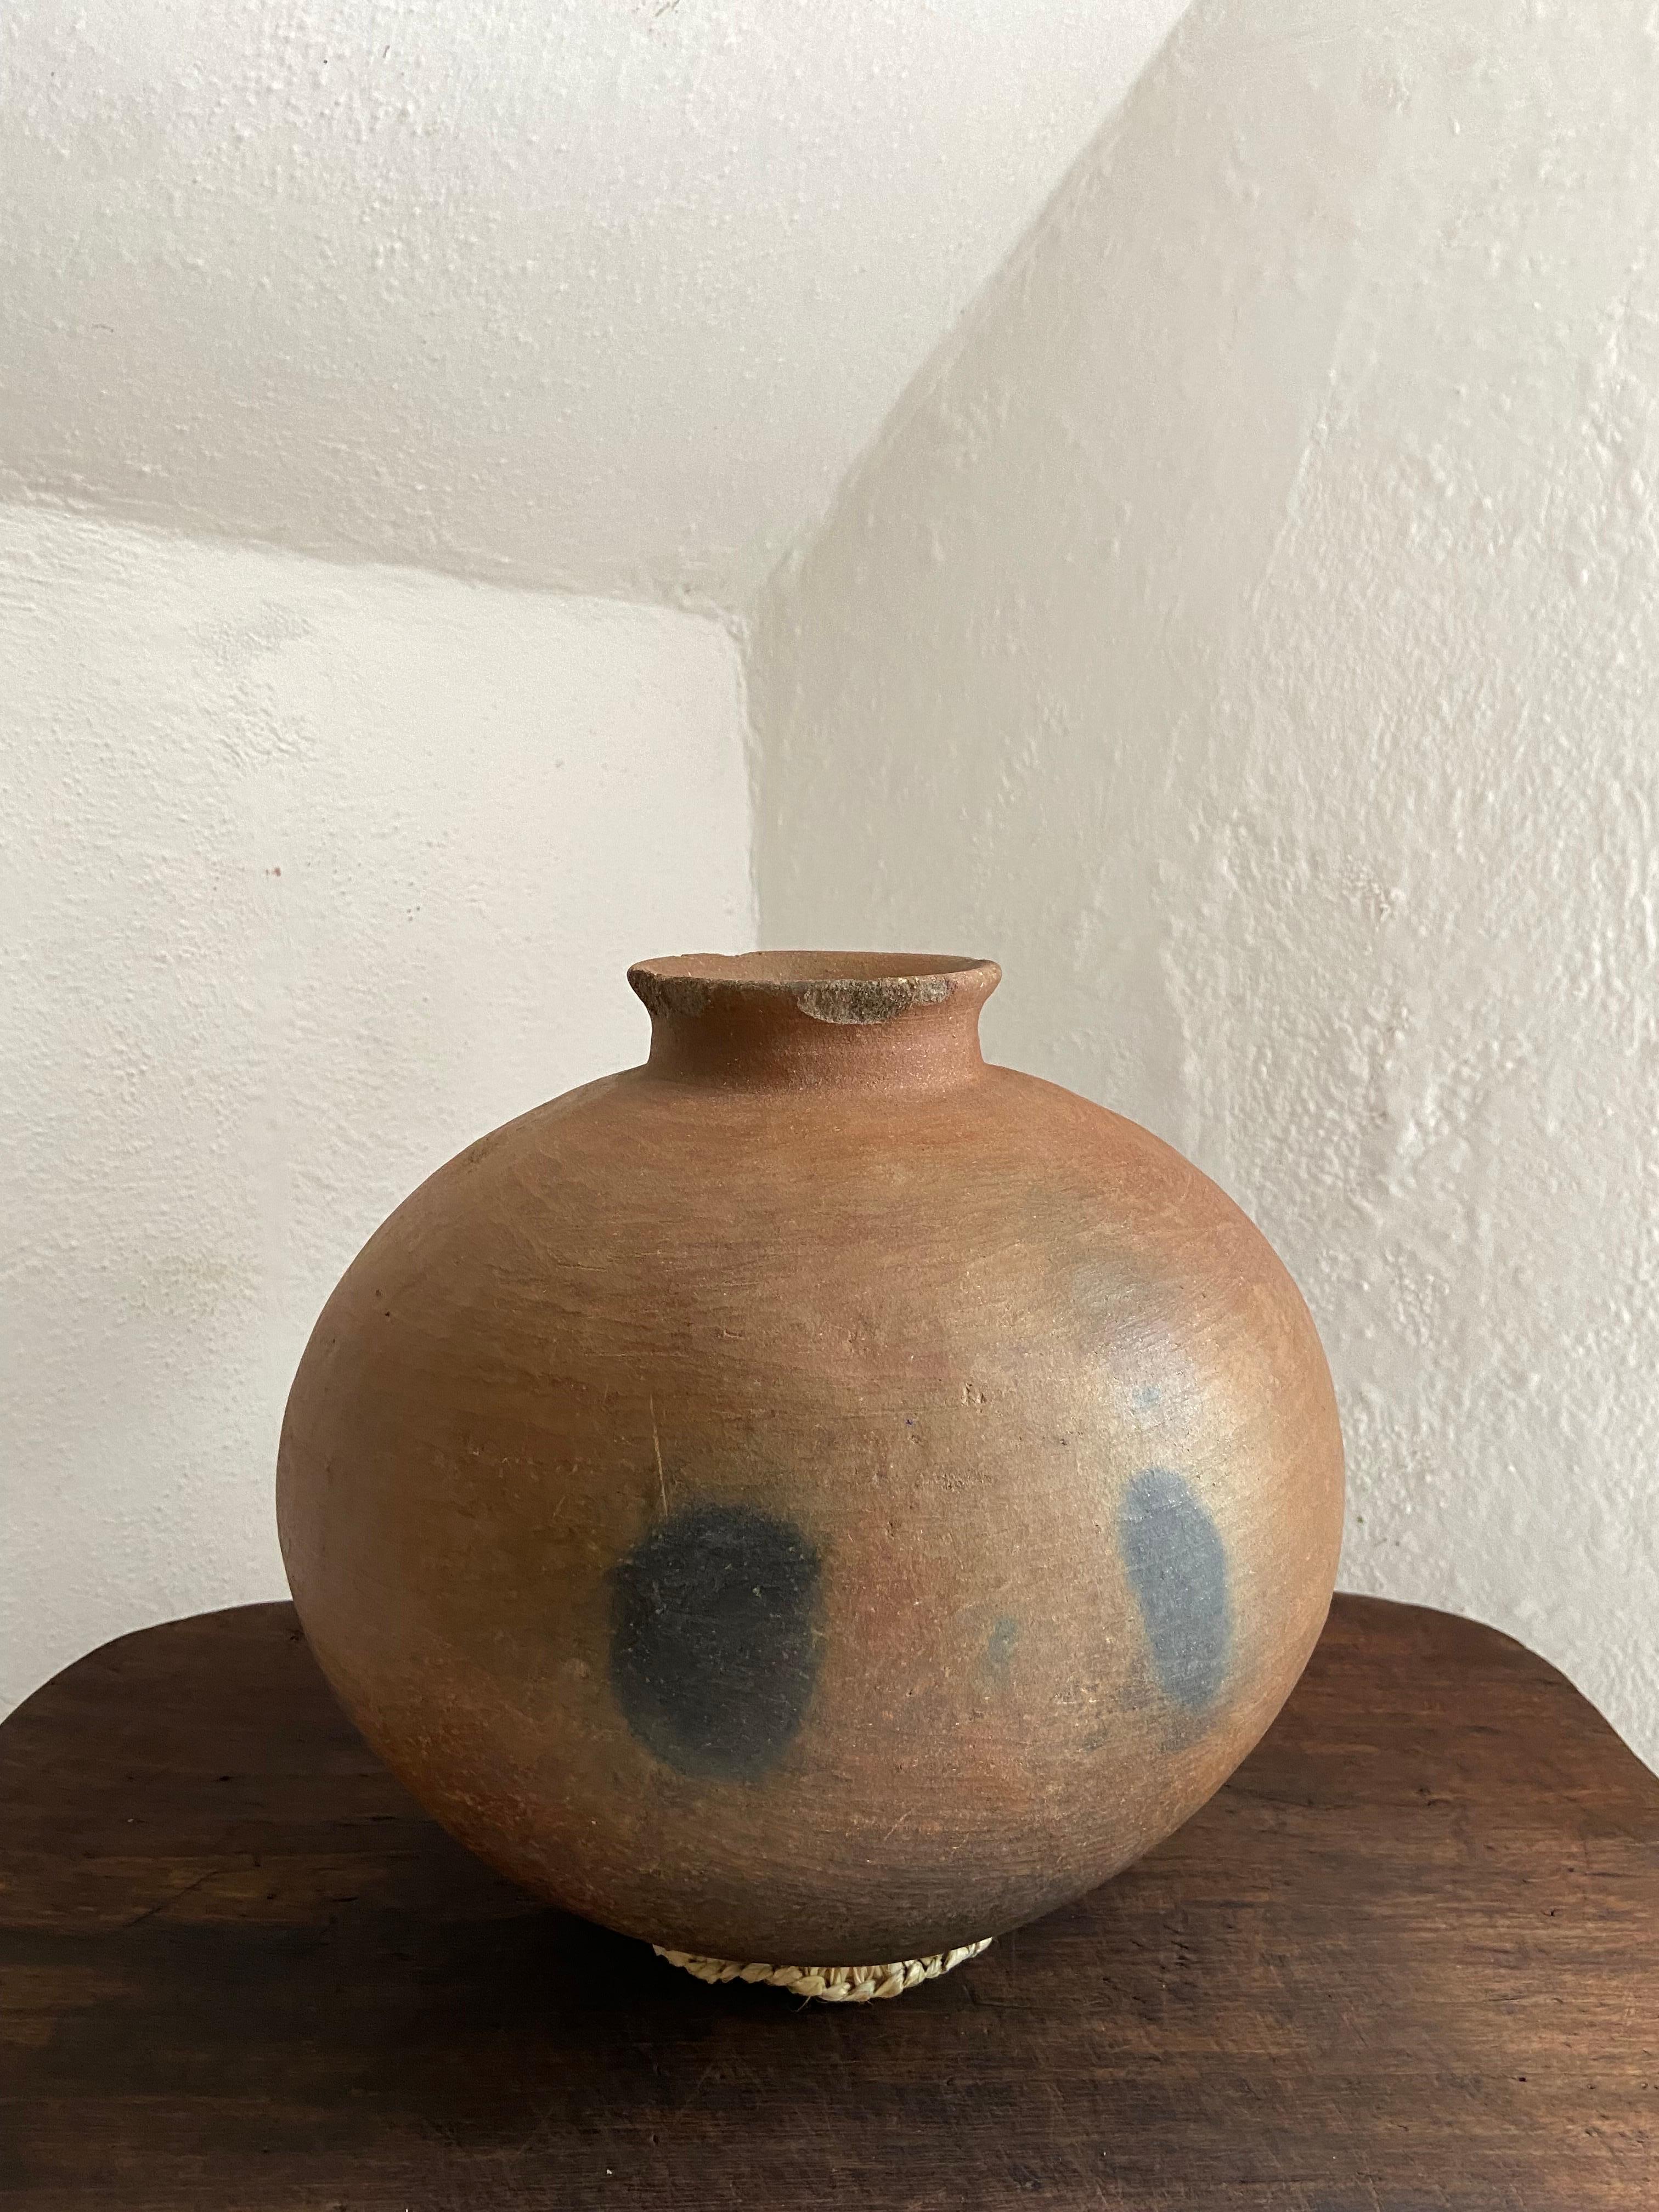 Mexican Terracotta Pot From The Mixteca Region Of Oaxaca, Mexico, Circa 1940's